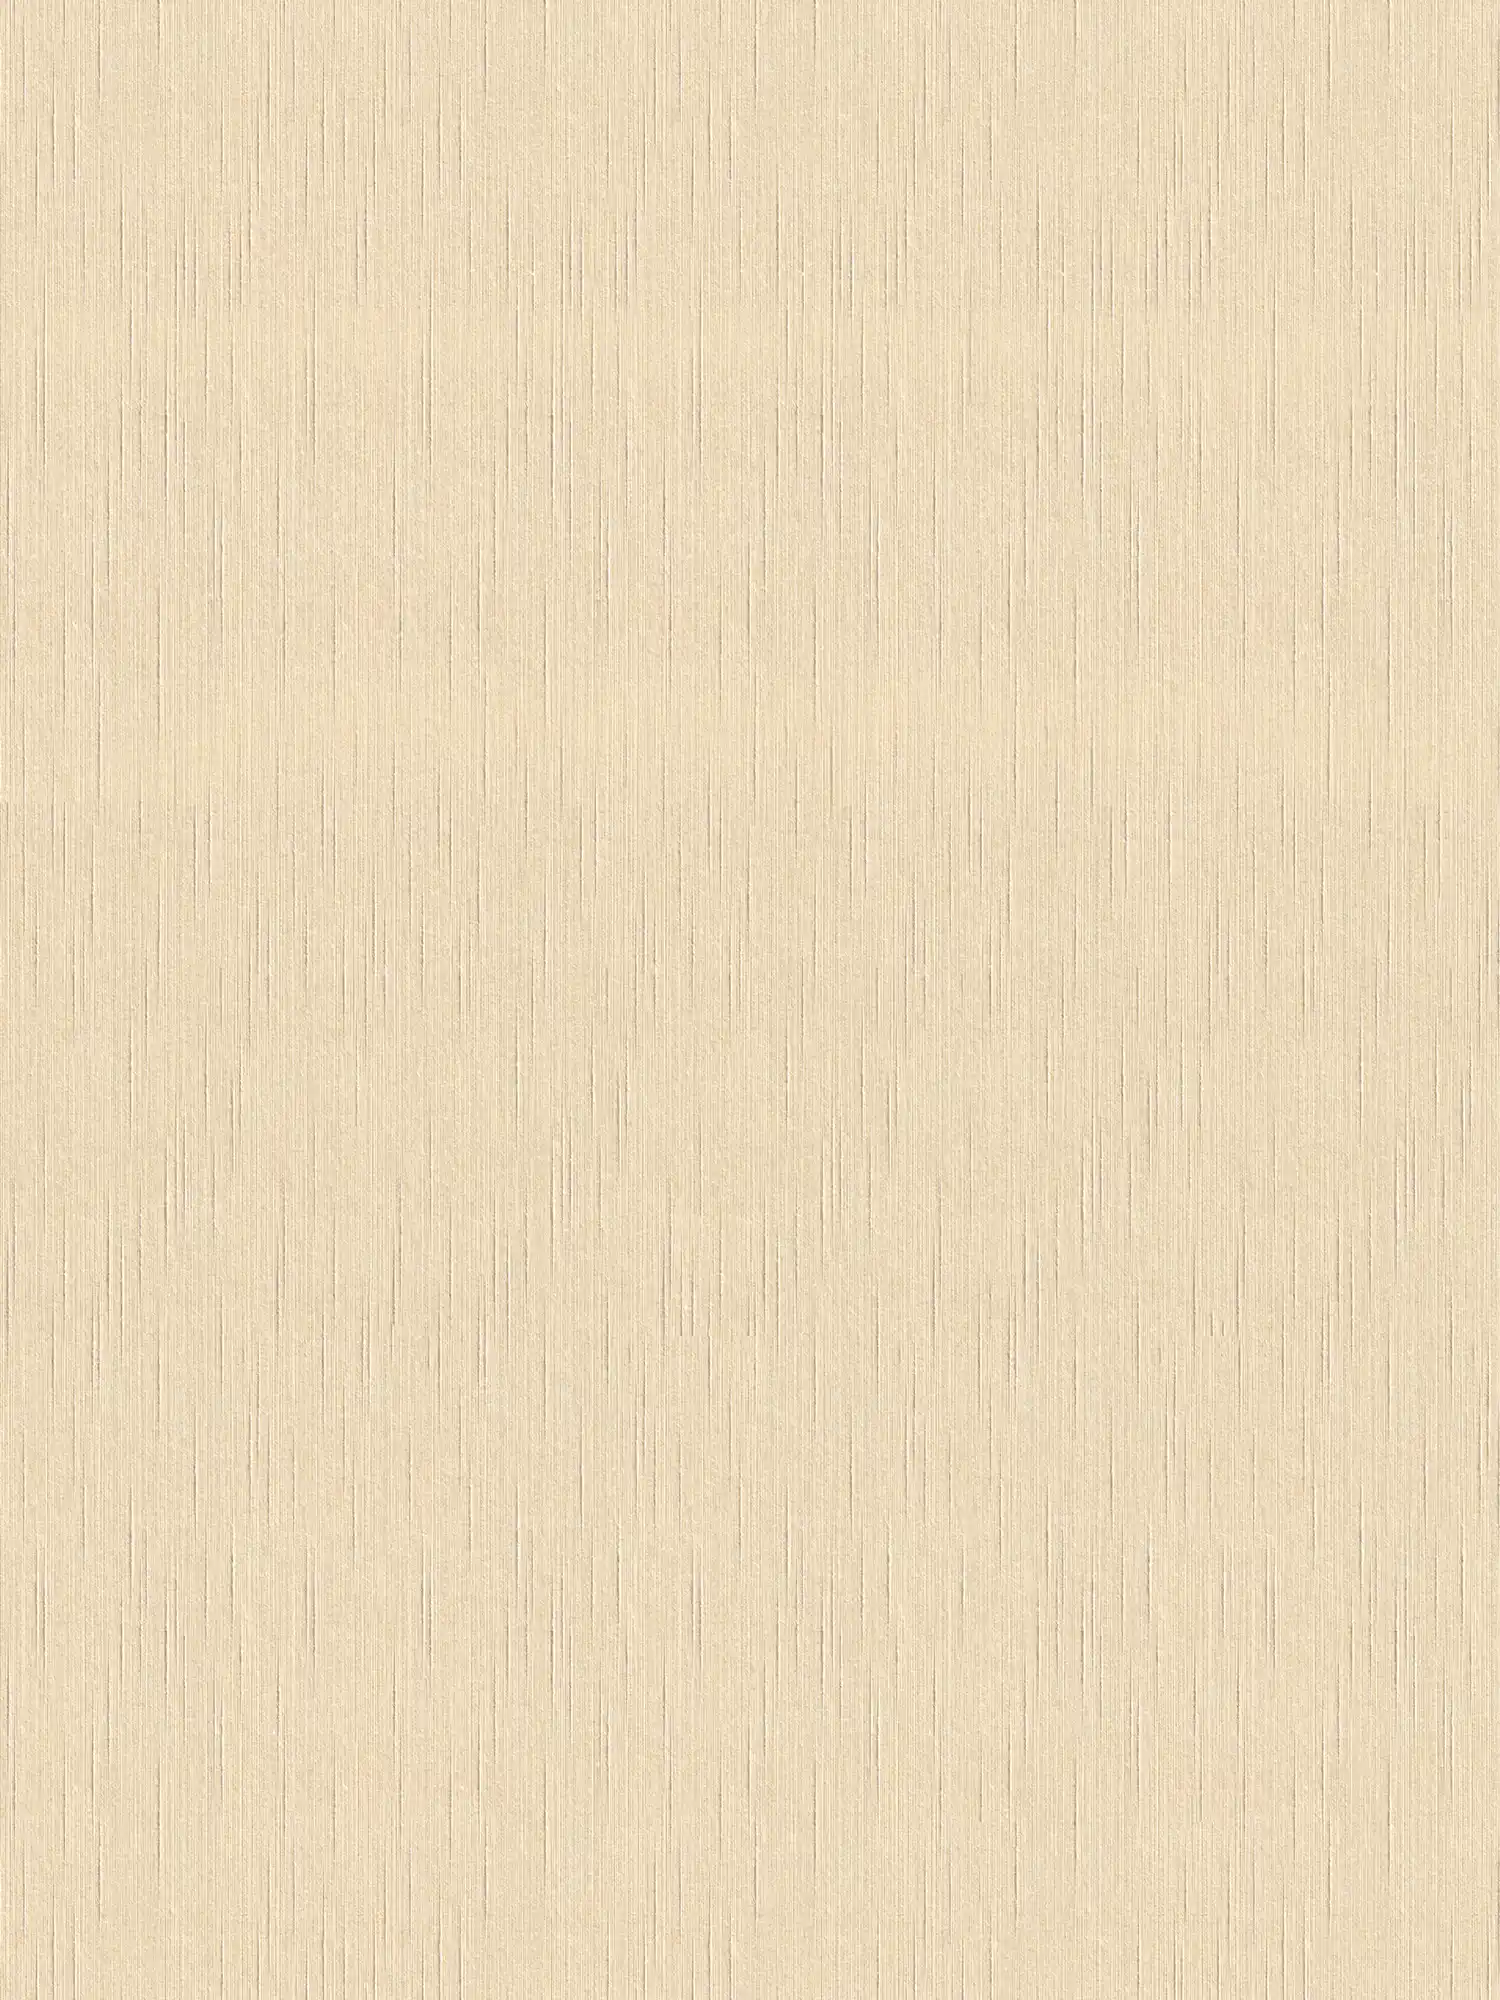 Textile optics wallpaper cream plain beige mottled
